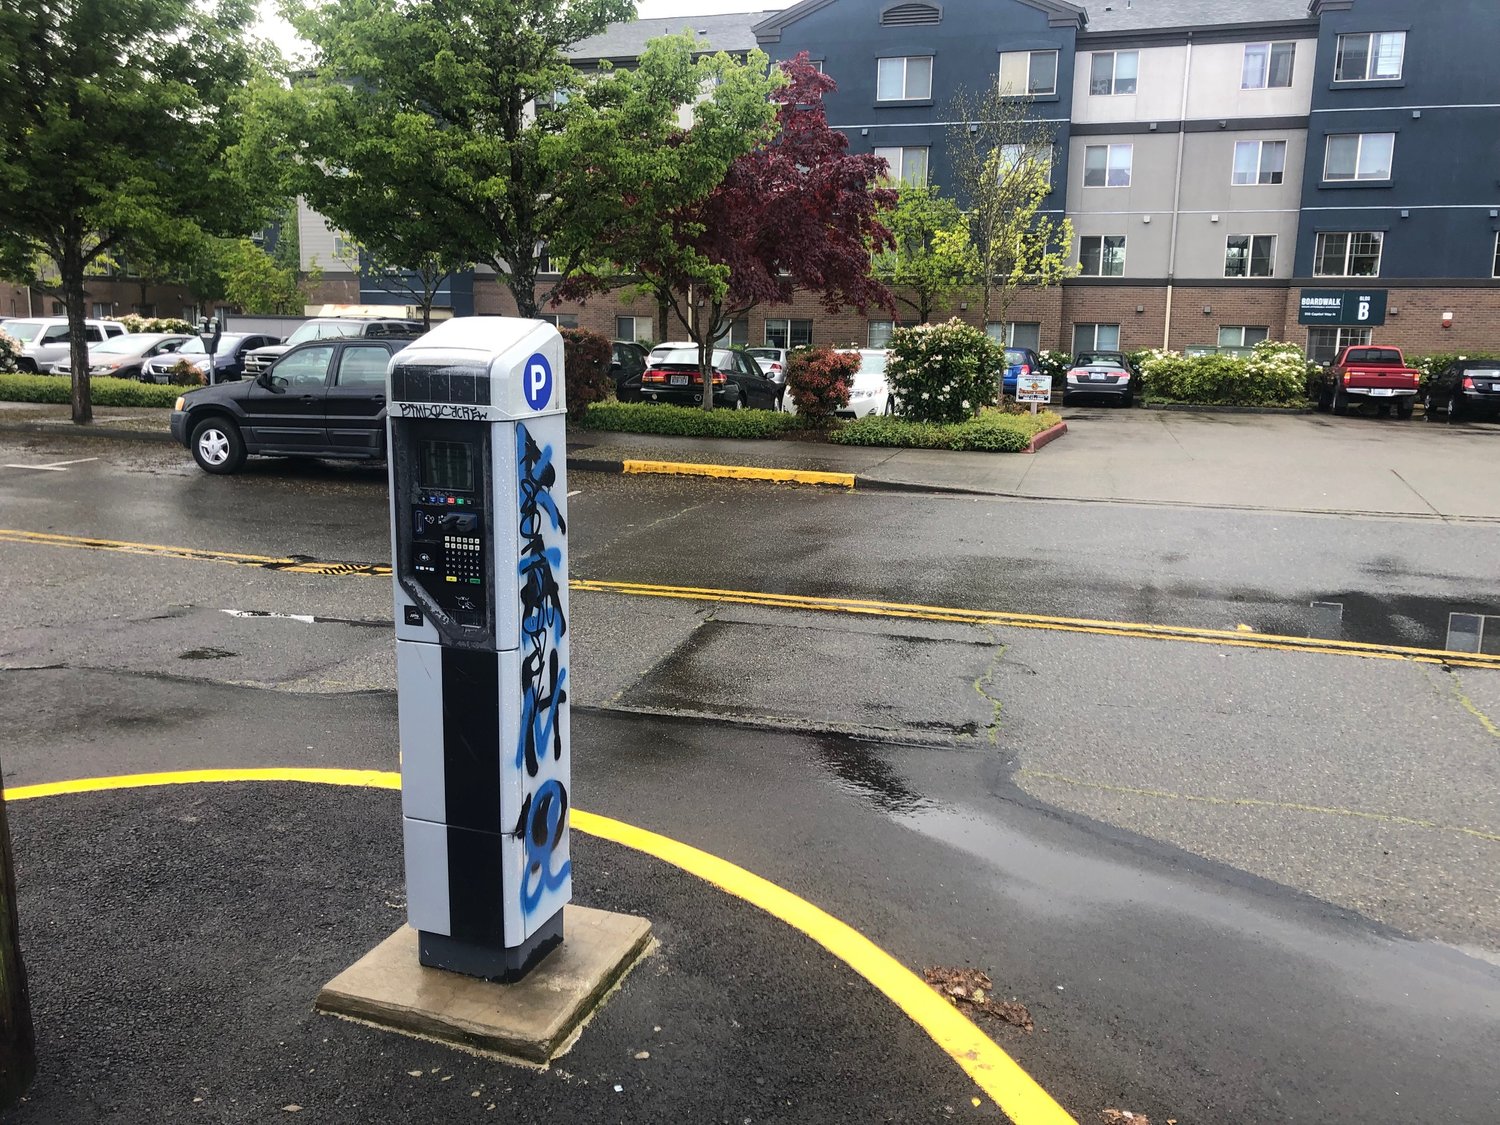 An electric car charging kiosk at Washington Street between A and B Avenues.